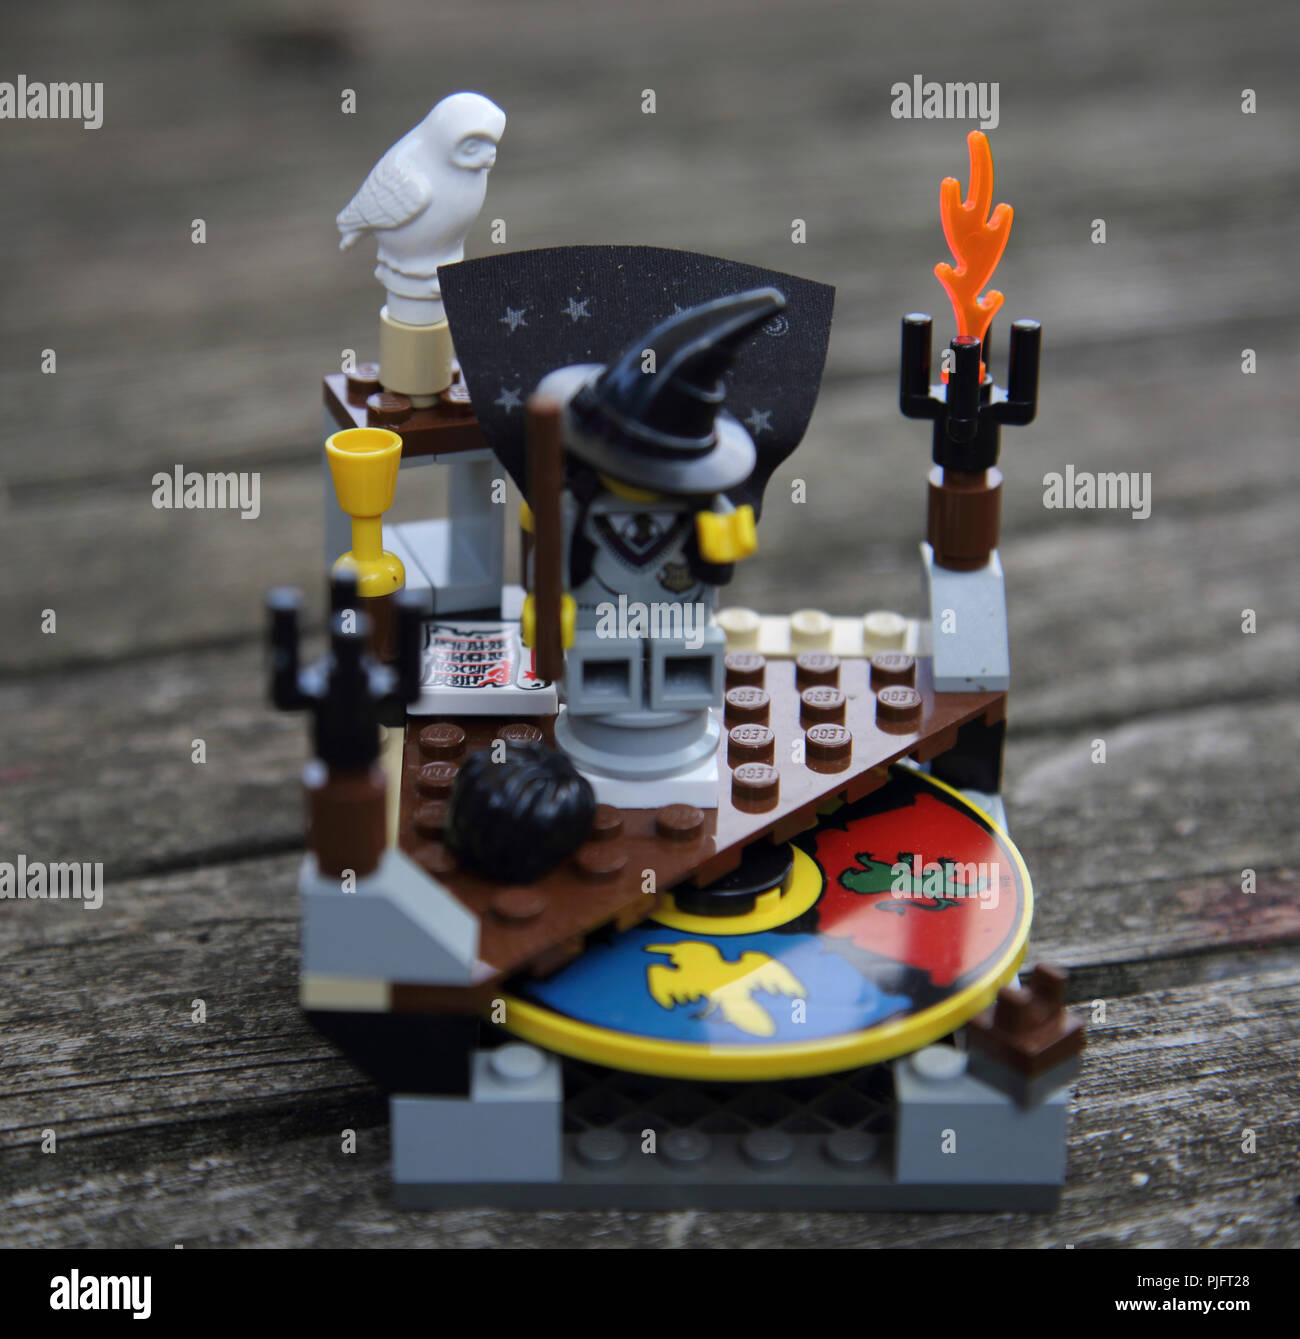 Lego Harry Potter e la pietra filosofale ordinamento Hat Foto Stock